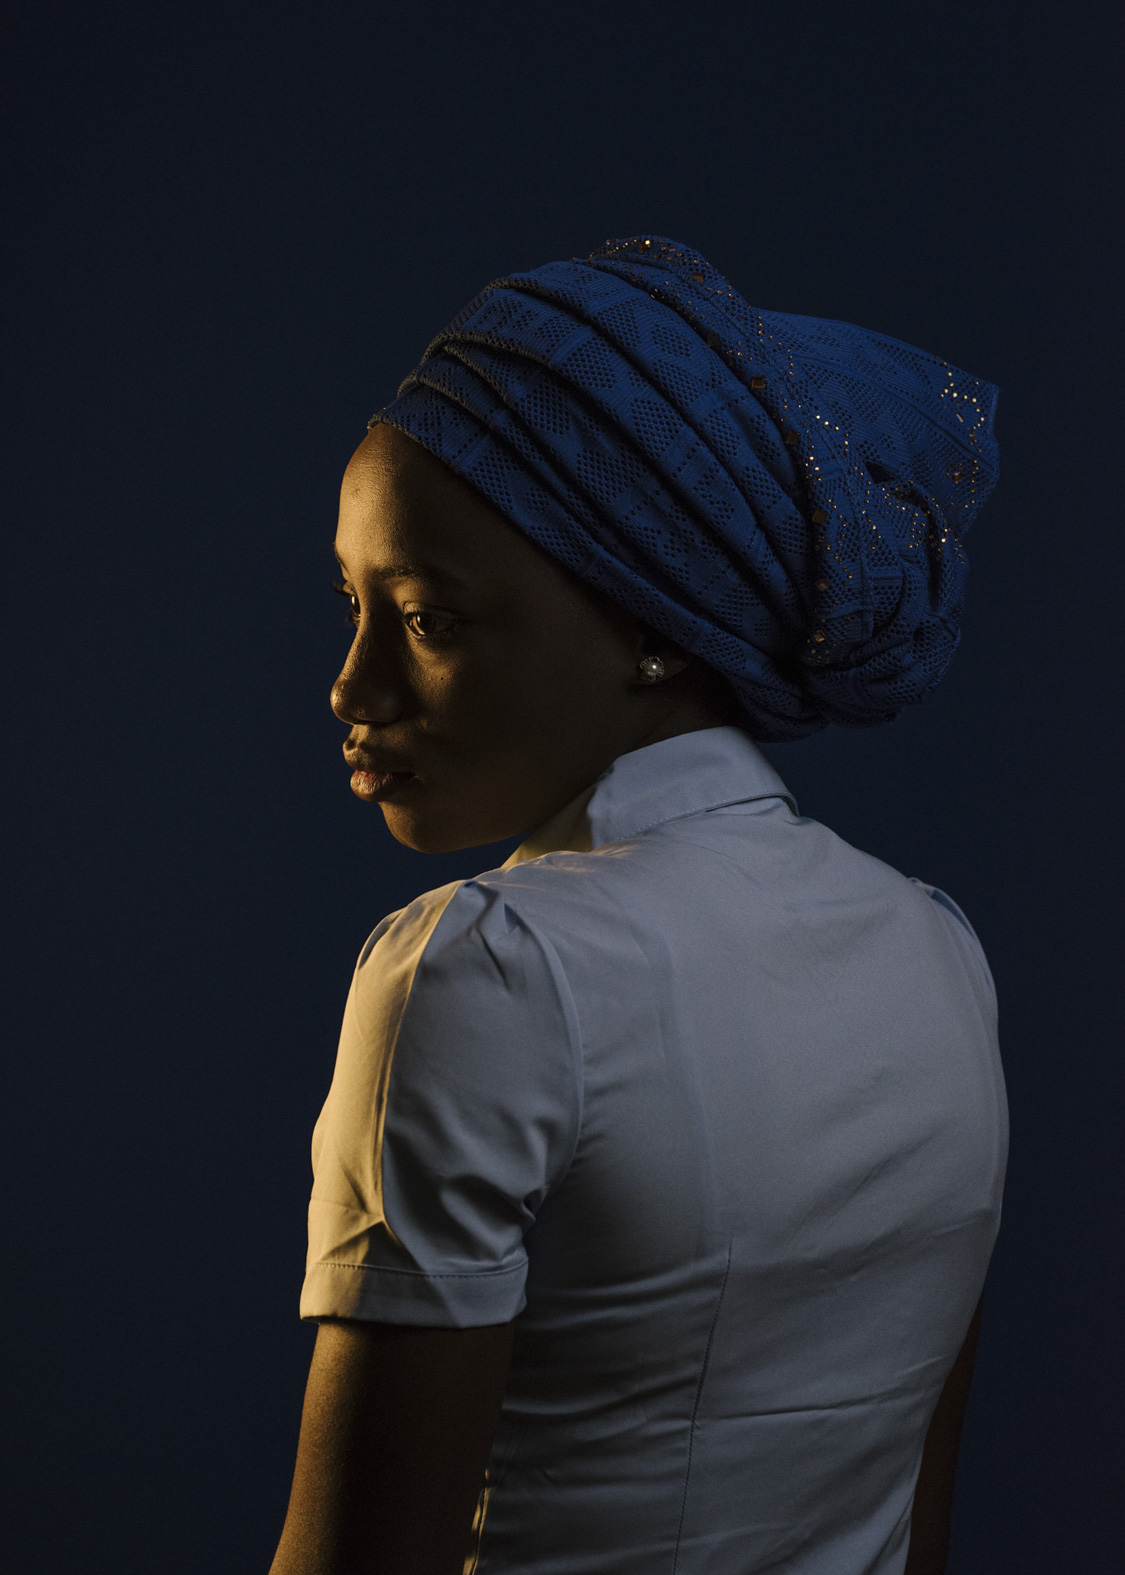  Rahab Ibrahim, ‘Chibok Girl’ for  The New York Times  